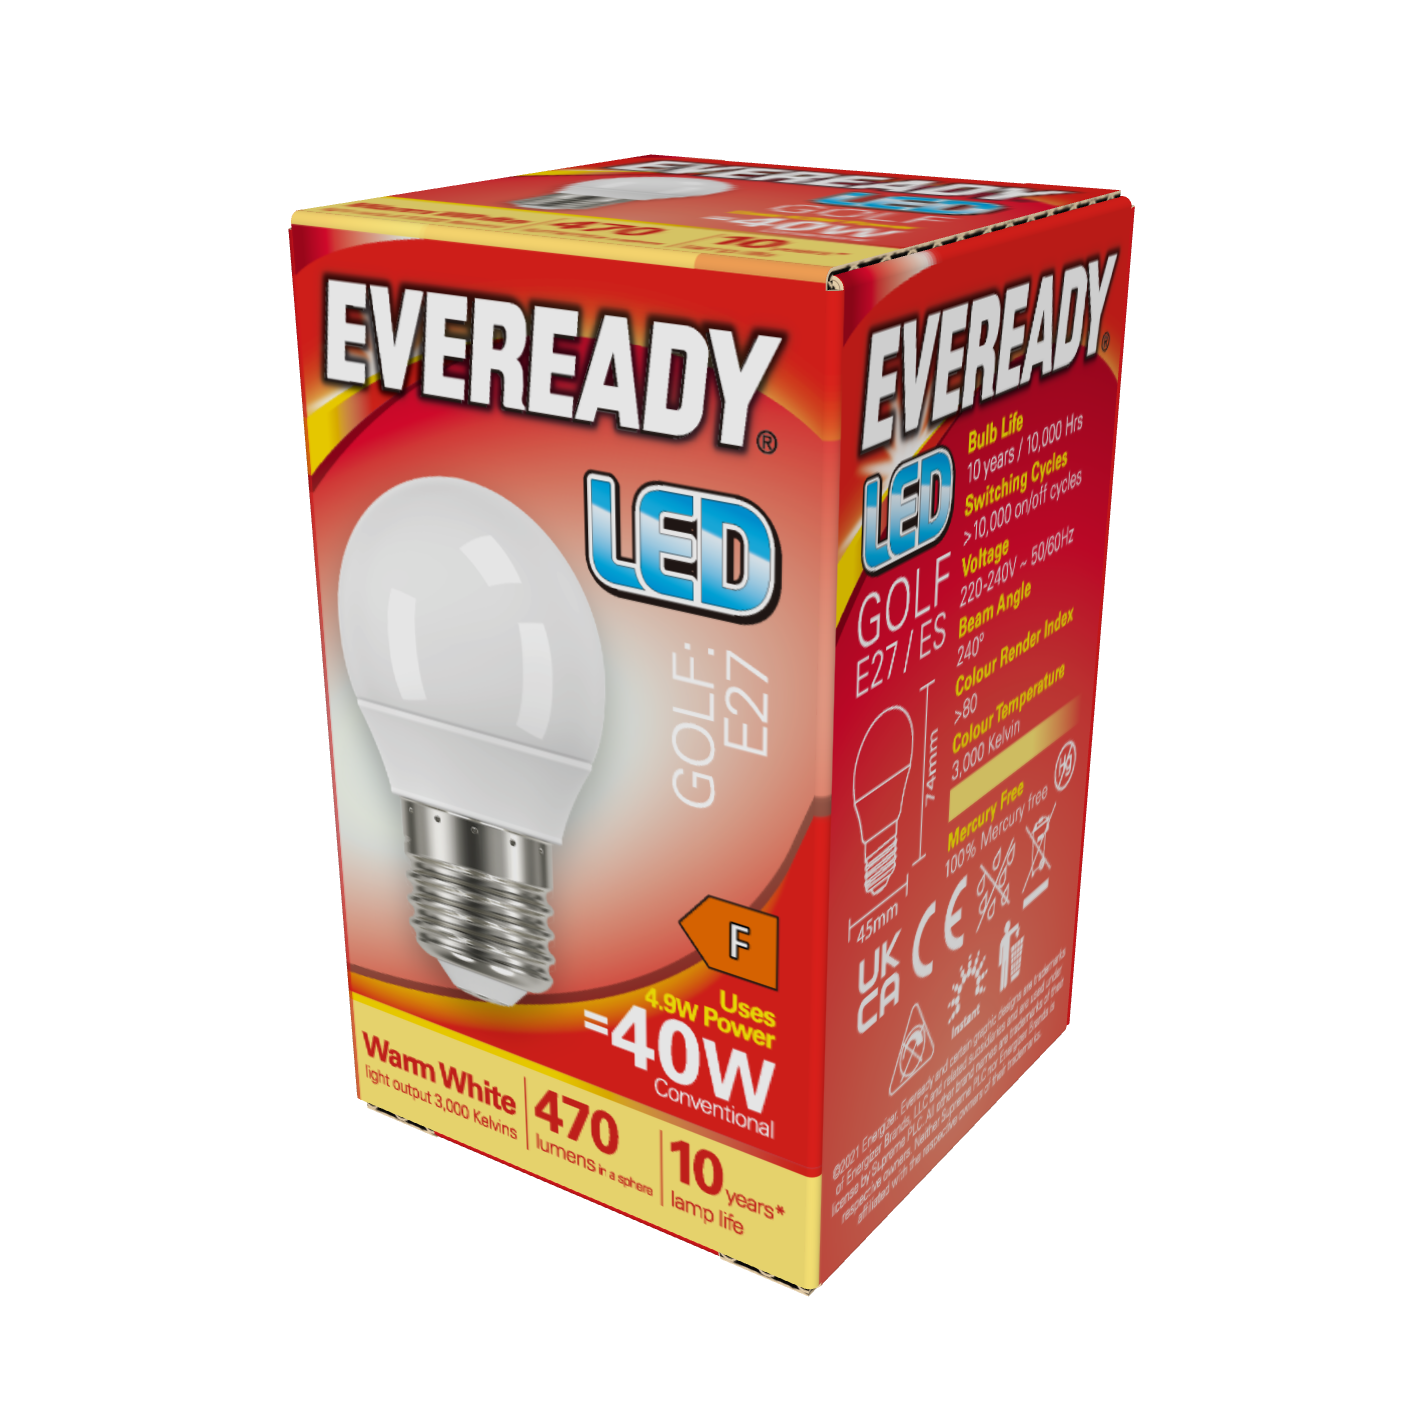 Eveready LED Golf E27 (ES) 470lm 4.9W 3,000K (Warm White), Box of 1